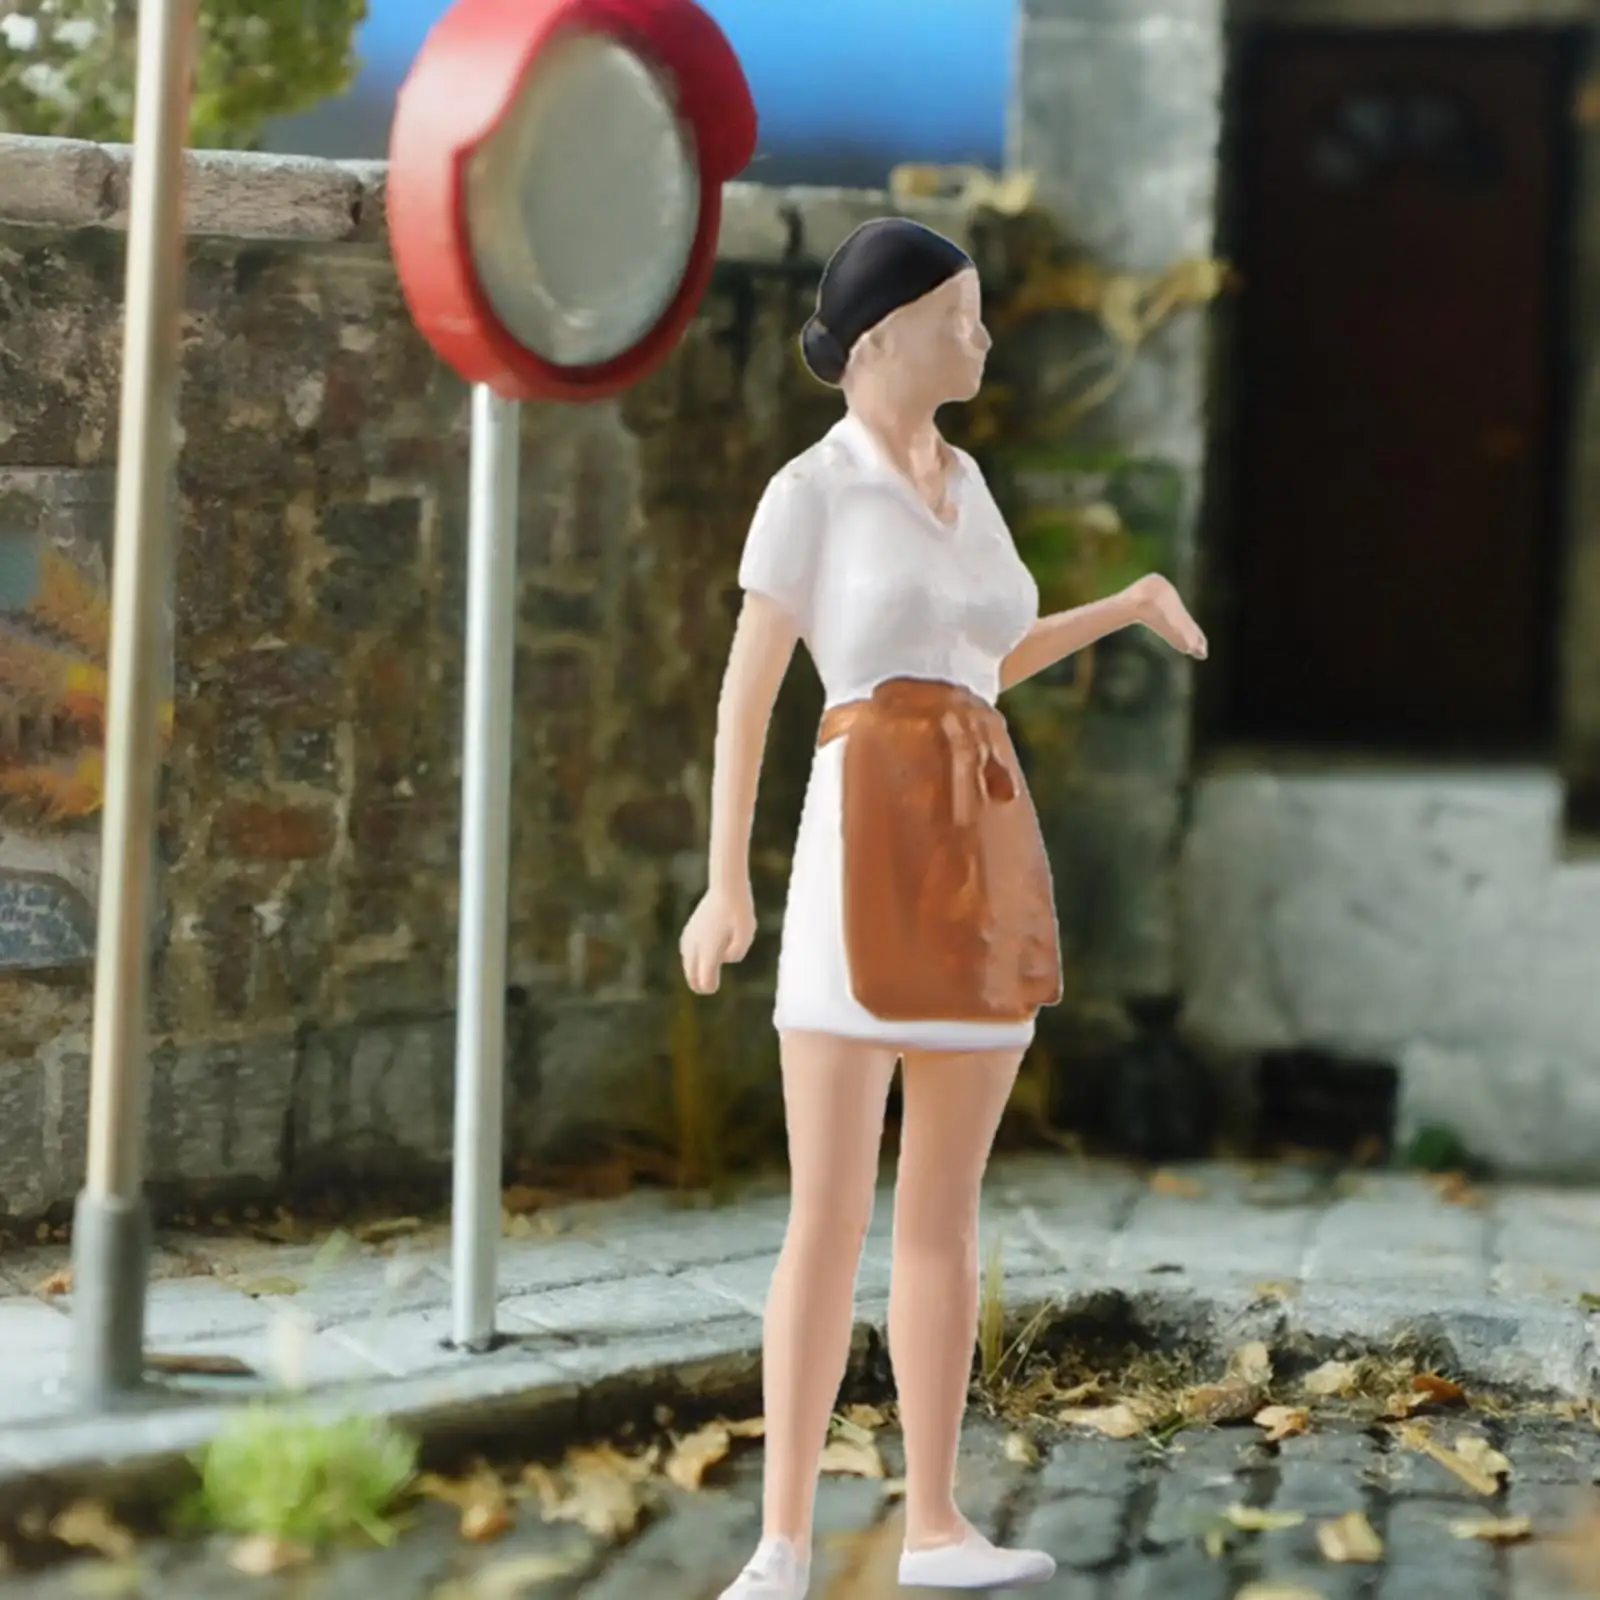 1/64 Hostess Figure Cooking Scene Miniature Mini Figurine Doll for DIY Projects Train Railway Fairy Garden Accessory Layouts